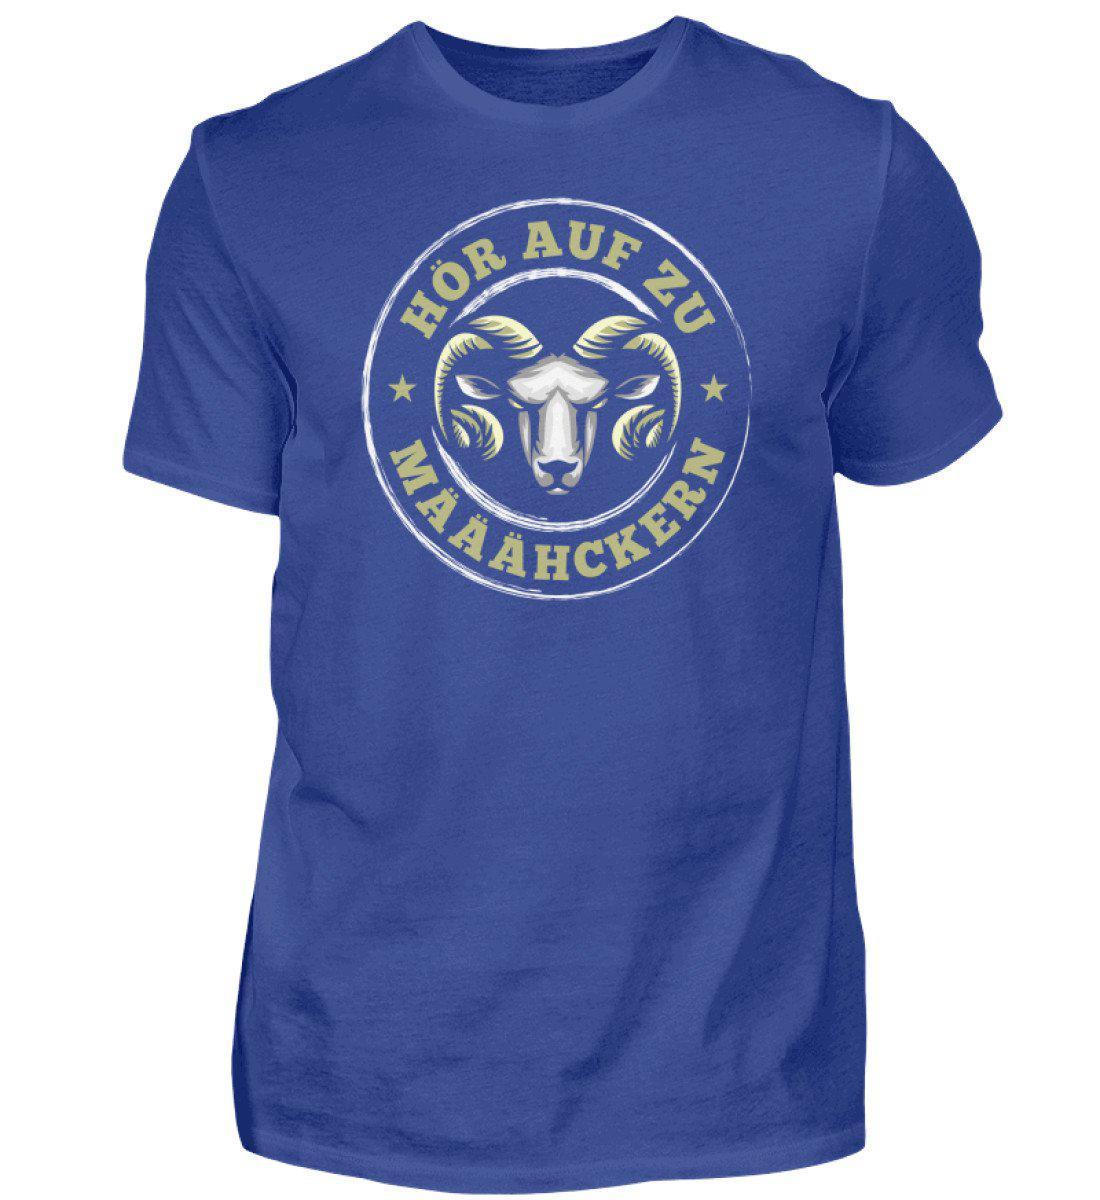 Hör auf zu määähckern · Herren T-Shirt-Herren Basic T-Shirt-Royal Blue-S-Agrarstarz